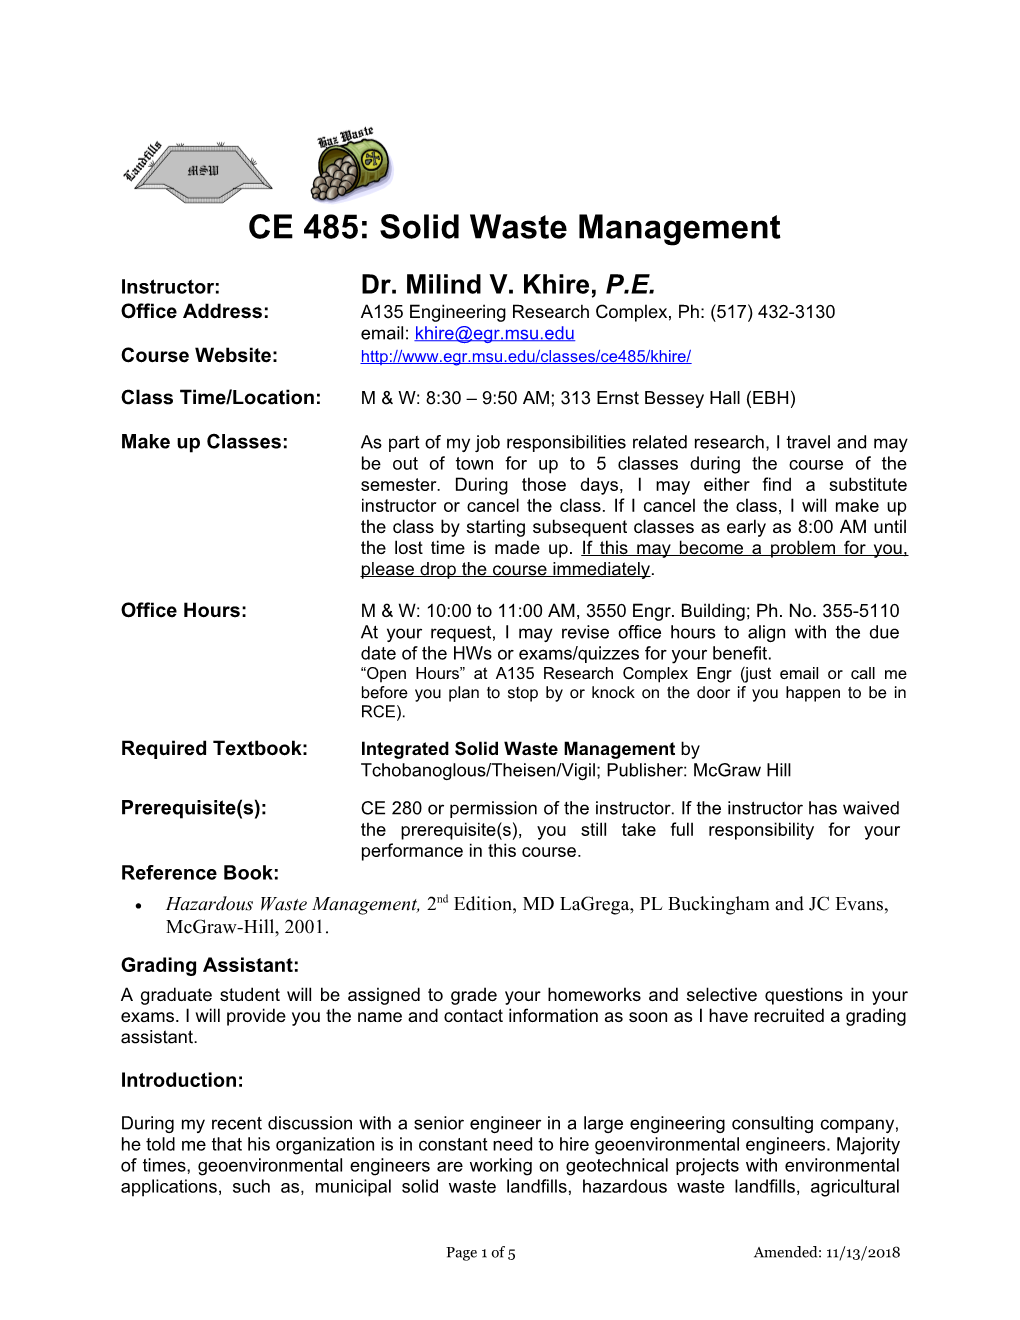 CE485: Solid Waste Management